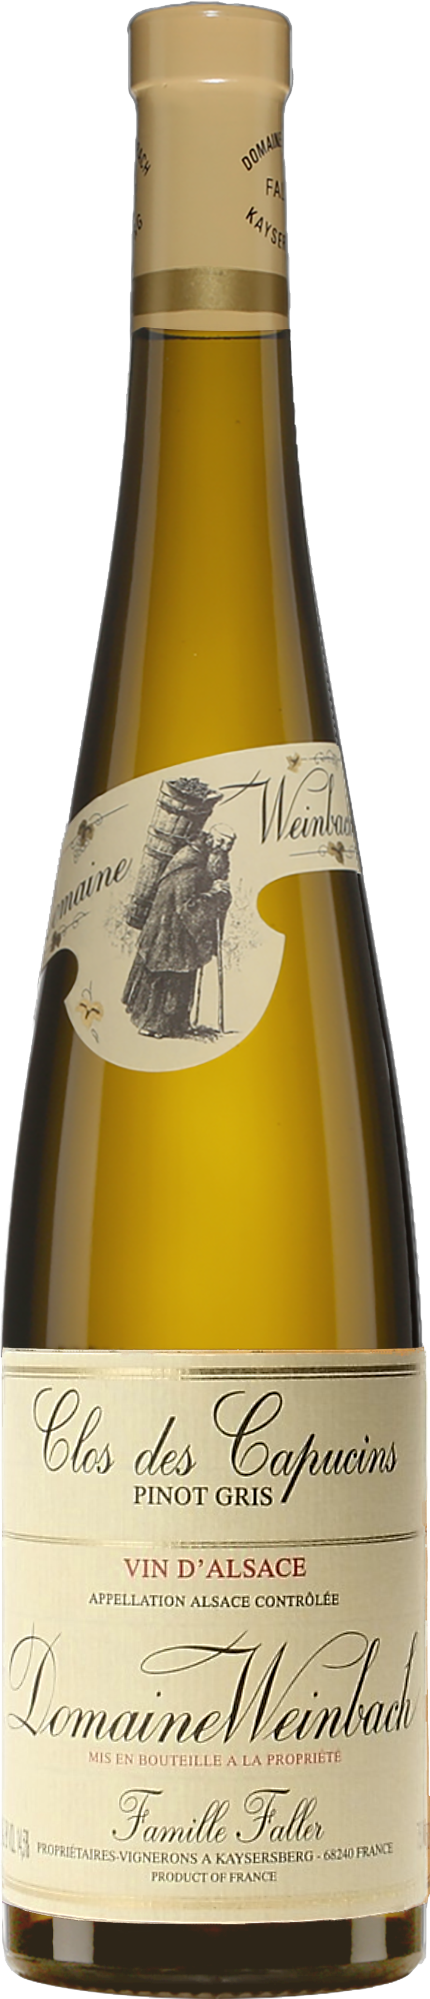 Weinbach Alsace Clos des Capucins Pinot Gris 2021